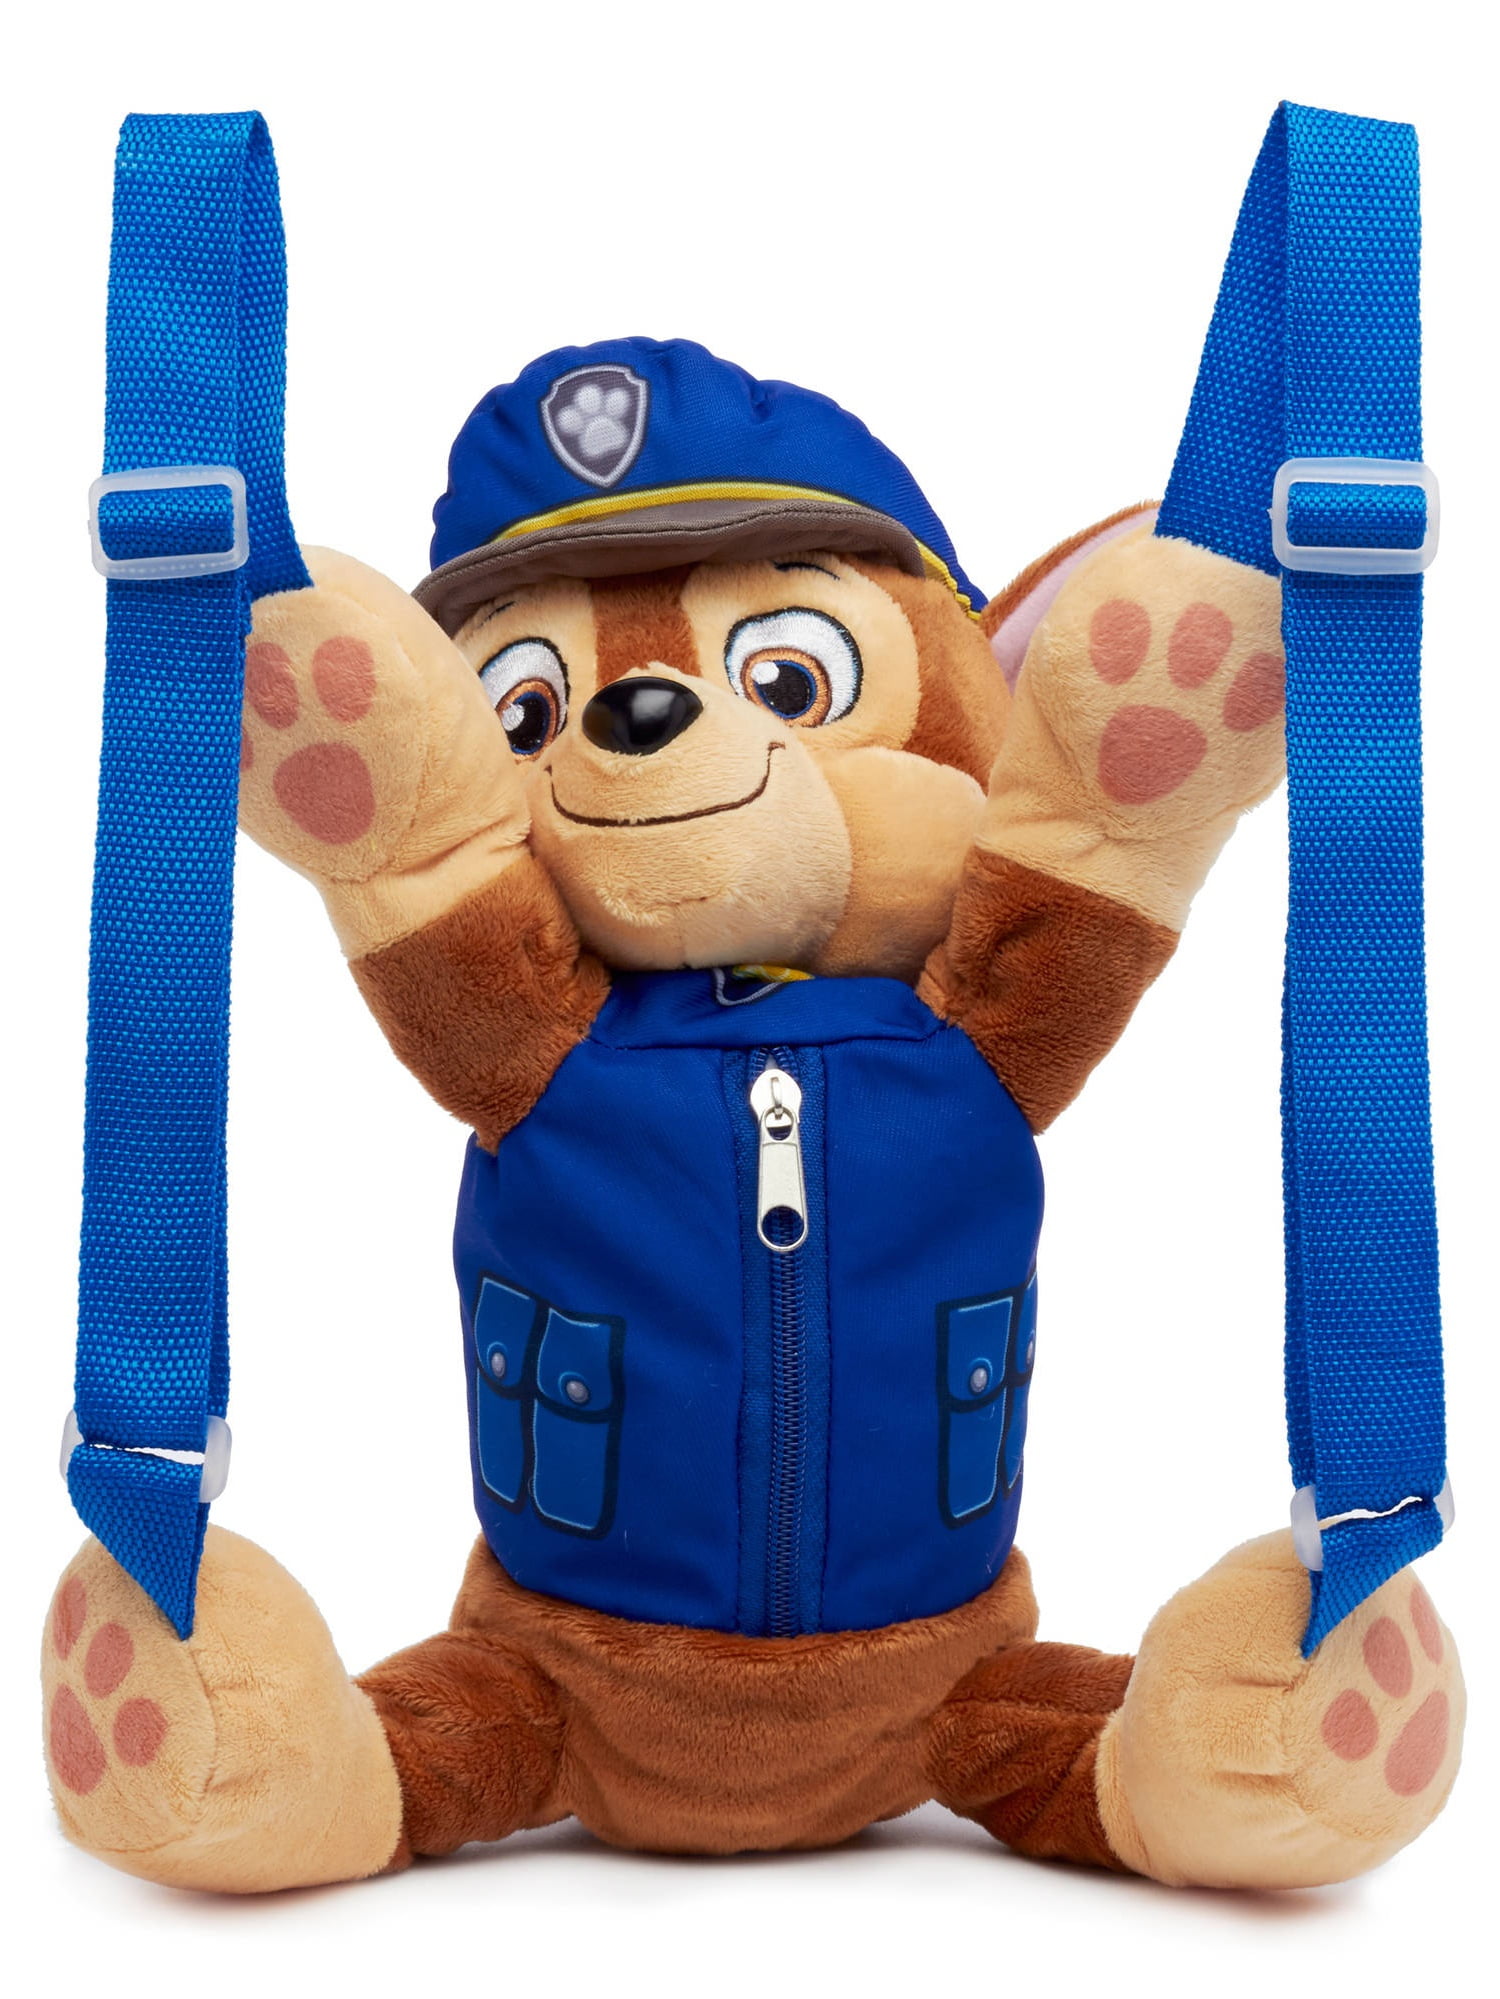 Plush Backpack Paw Patrol Stuffed Animal Toy Bag Soft Cuddly Animal Puppet 